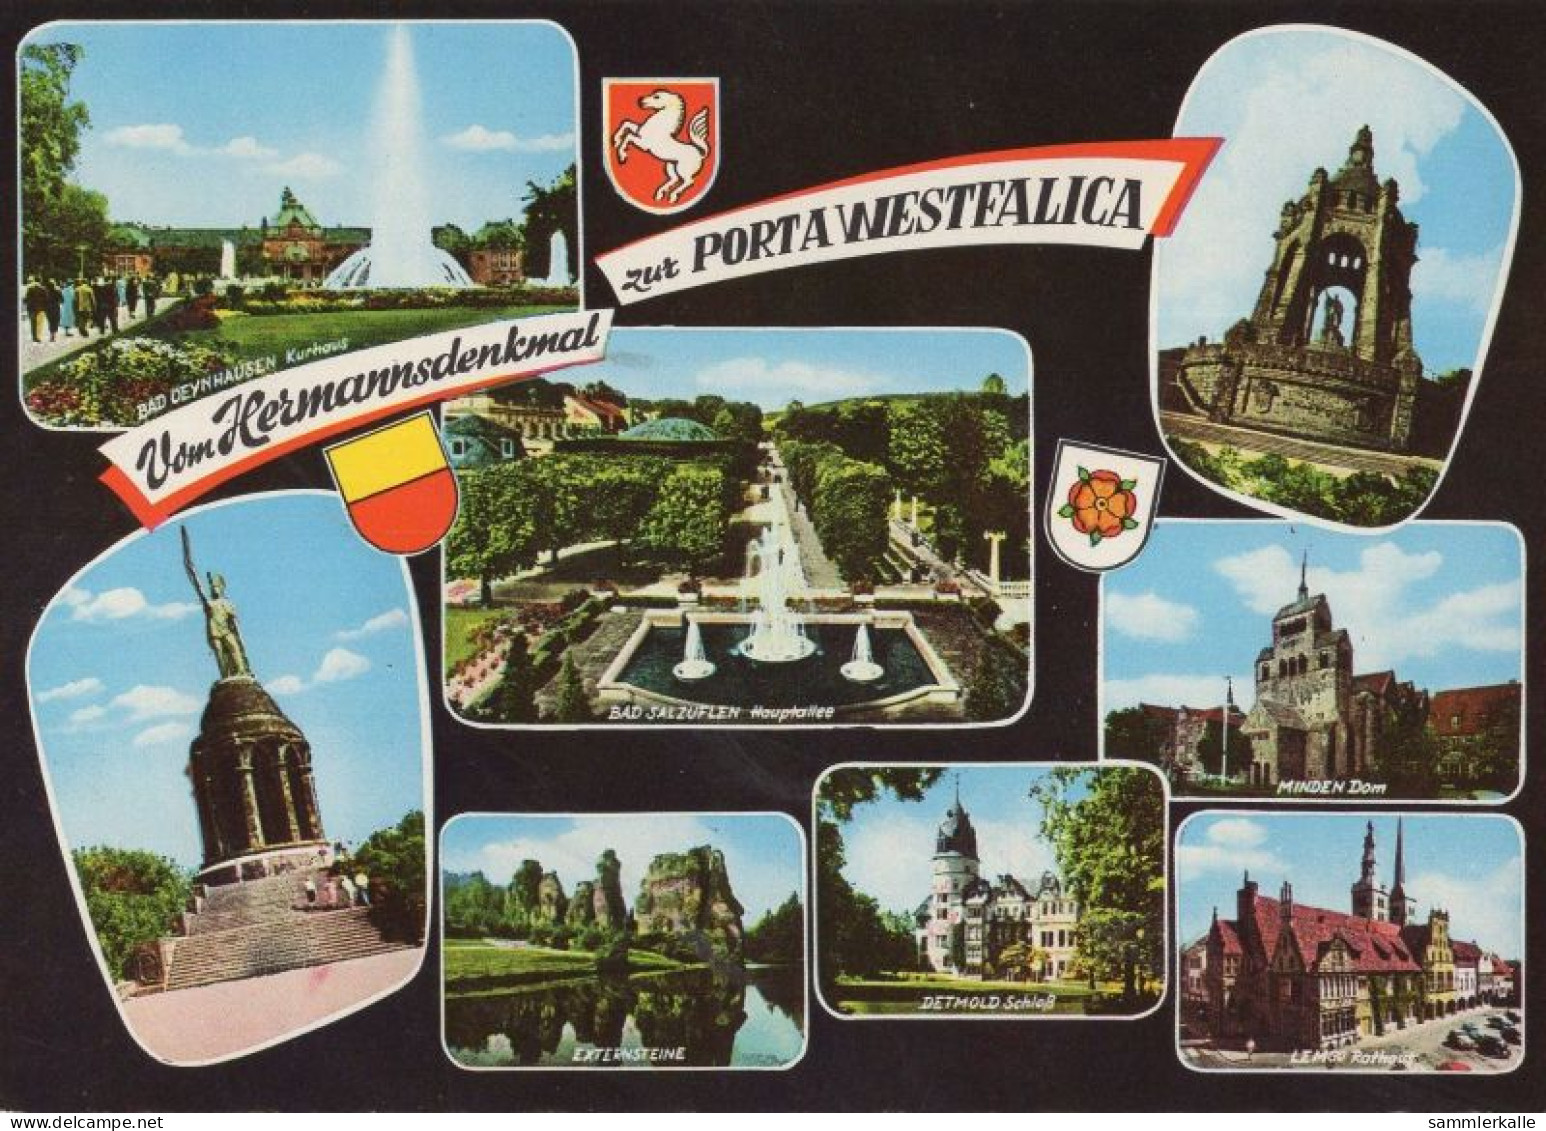 132113 - Porta Westfalica - Bis Hermannsdenkmal - Porta Westfalica